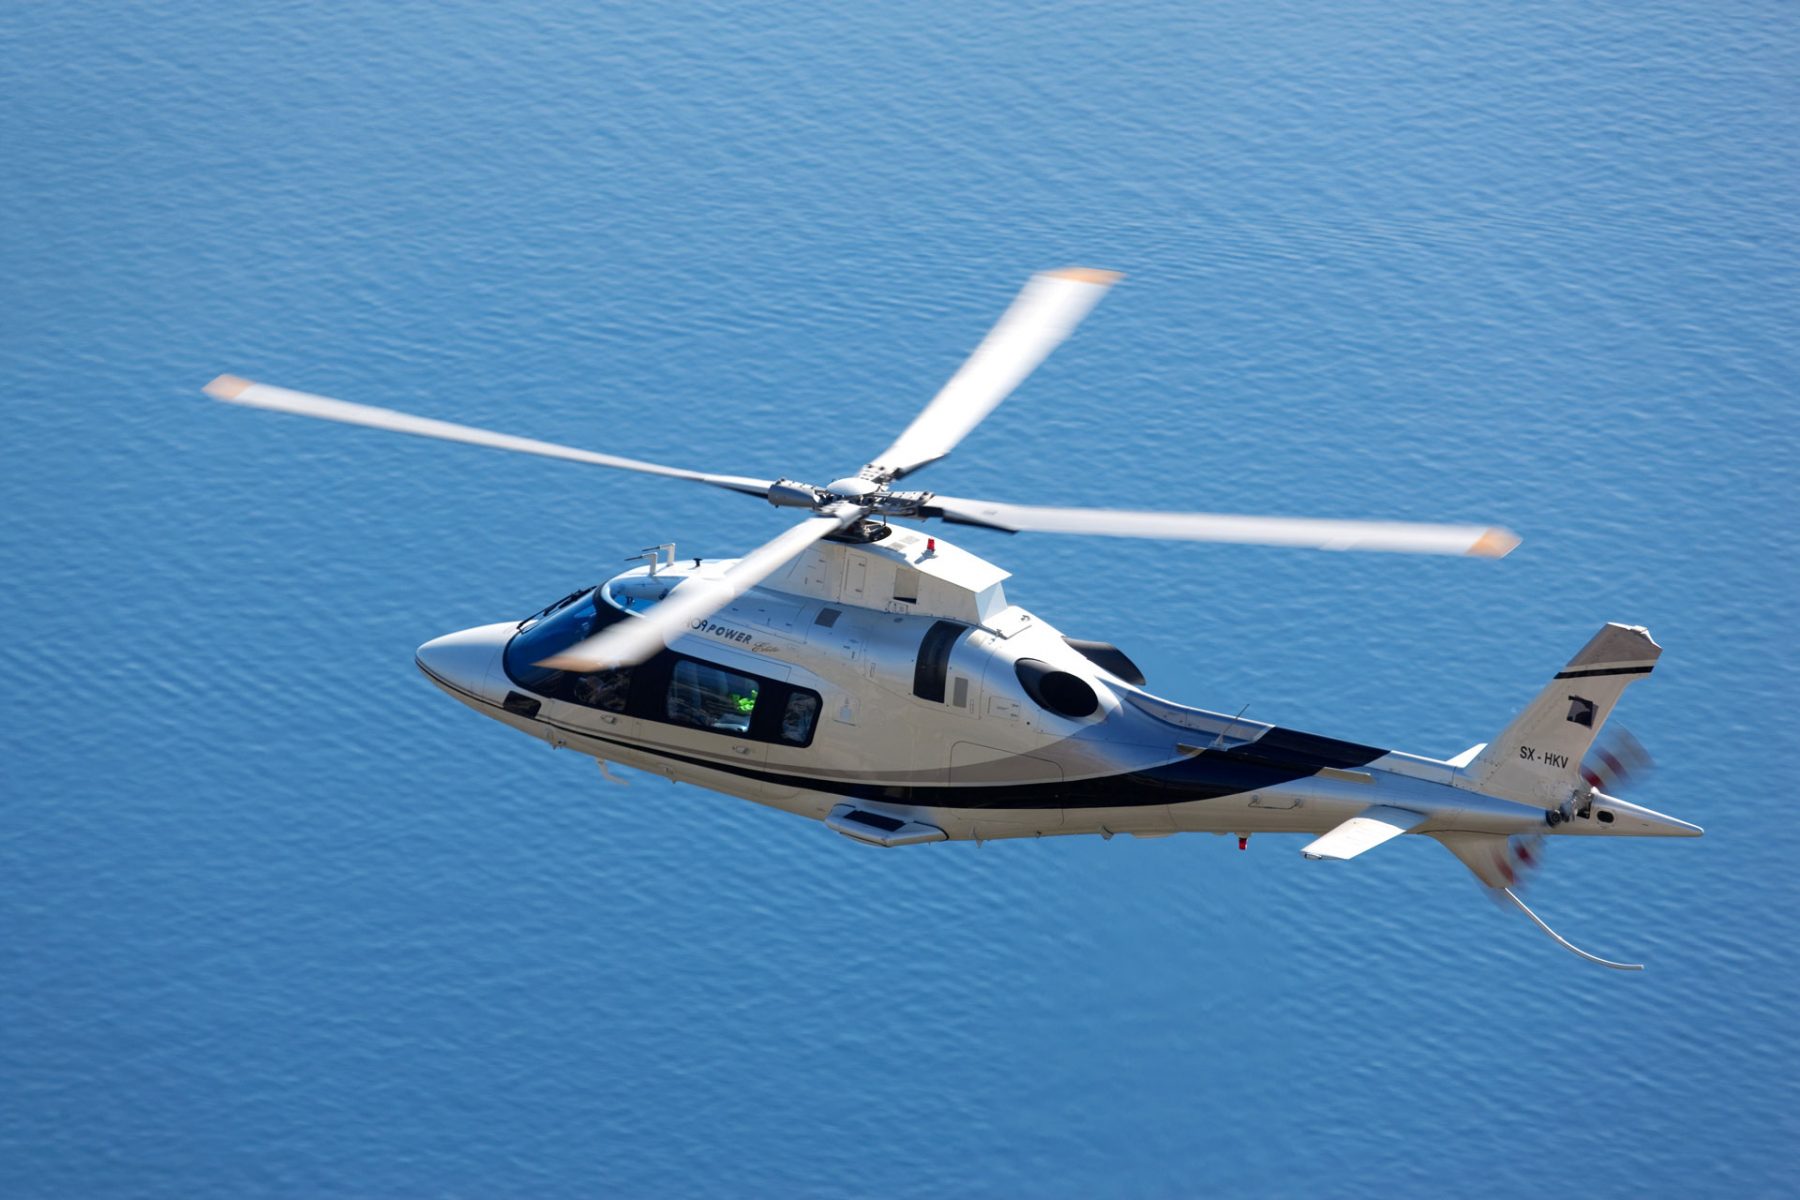 Leonardo A109 Power Elite Business Jet Charter Rent A Helicopter